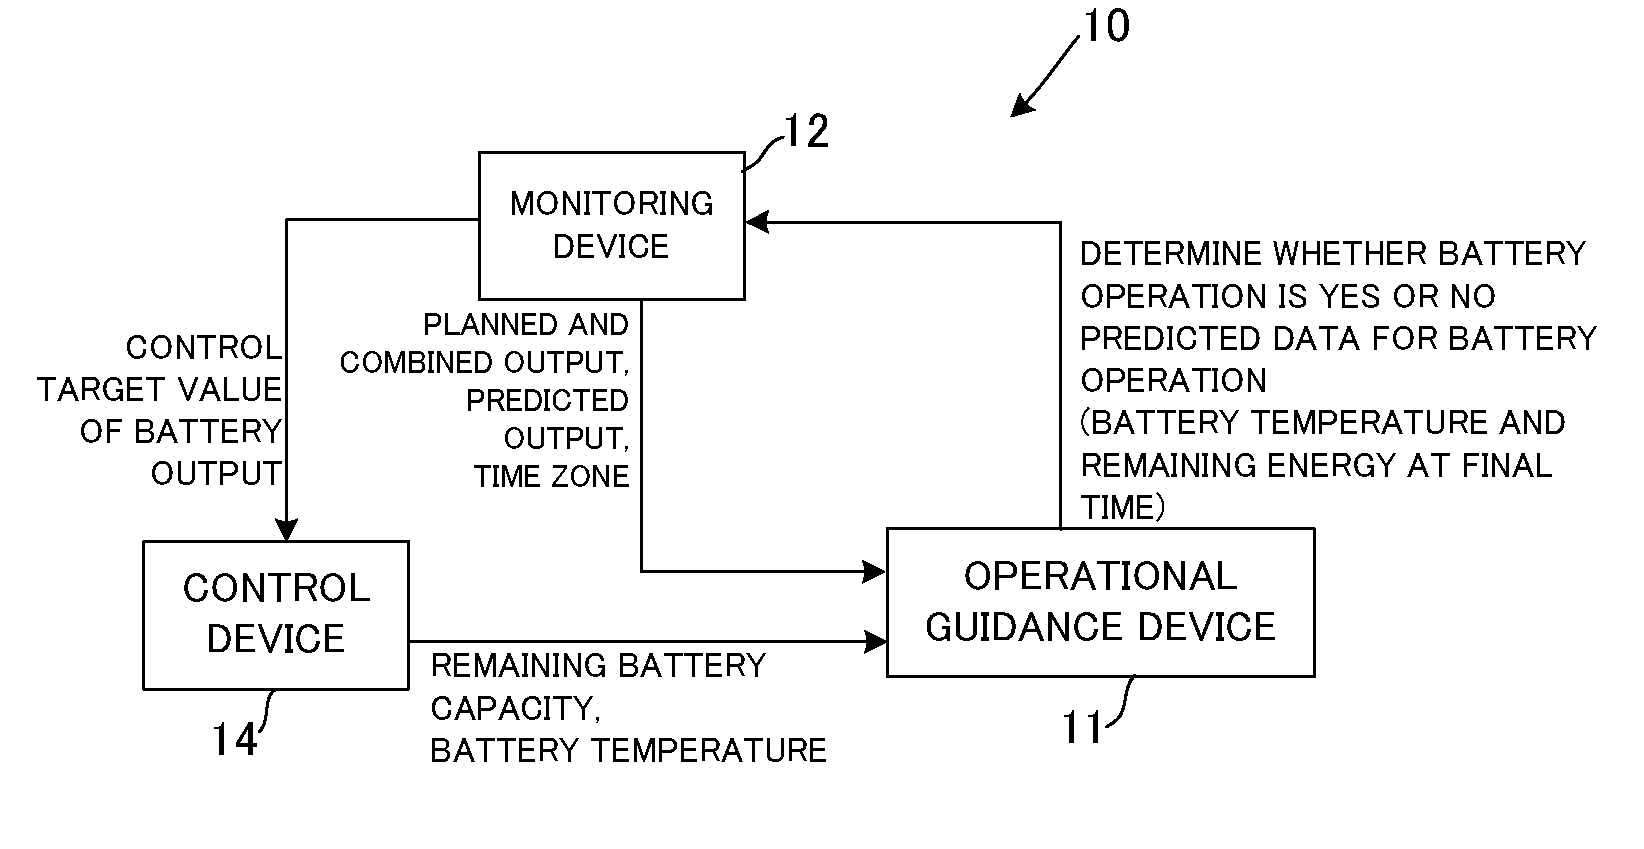 Operational guidance device of sodium-sulphur battery